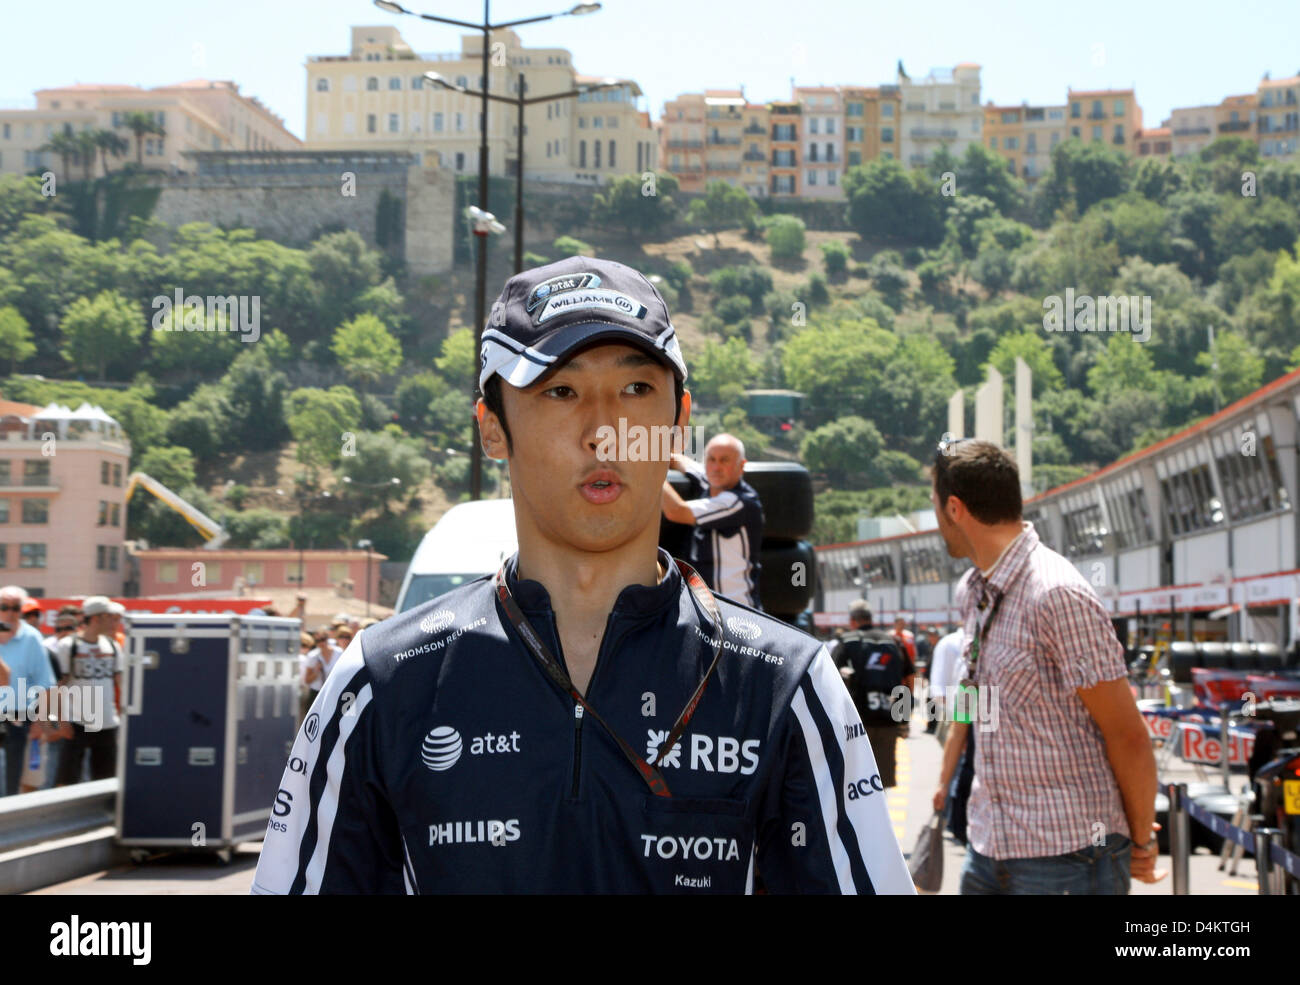 Japanese Formula One driver Kazuki Nakajima of Williams arrives at the Formula One racetrack of Monte Carlo, Monaco, 20 May 2009. The Grand Prix of Monaco will take place on 24 May. Photo: JENS BUETTNER Stock Photo